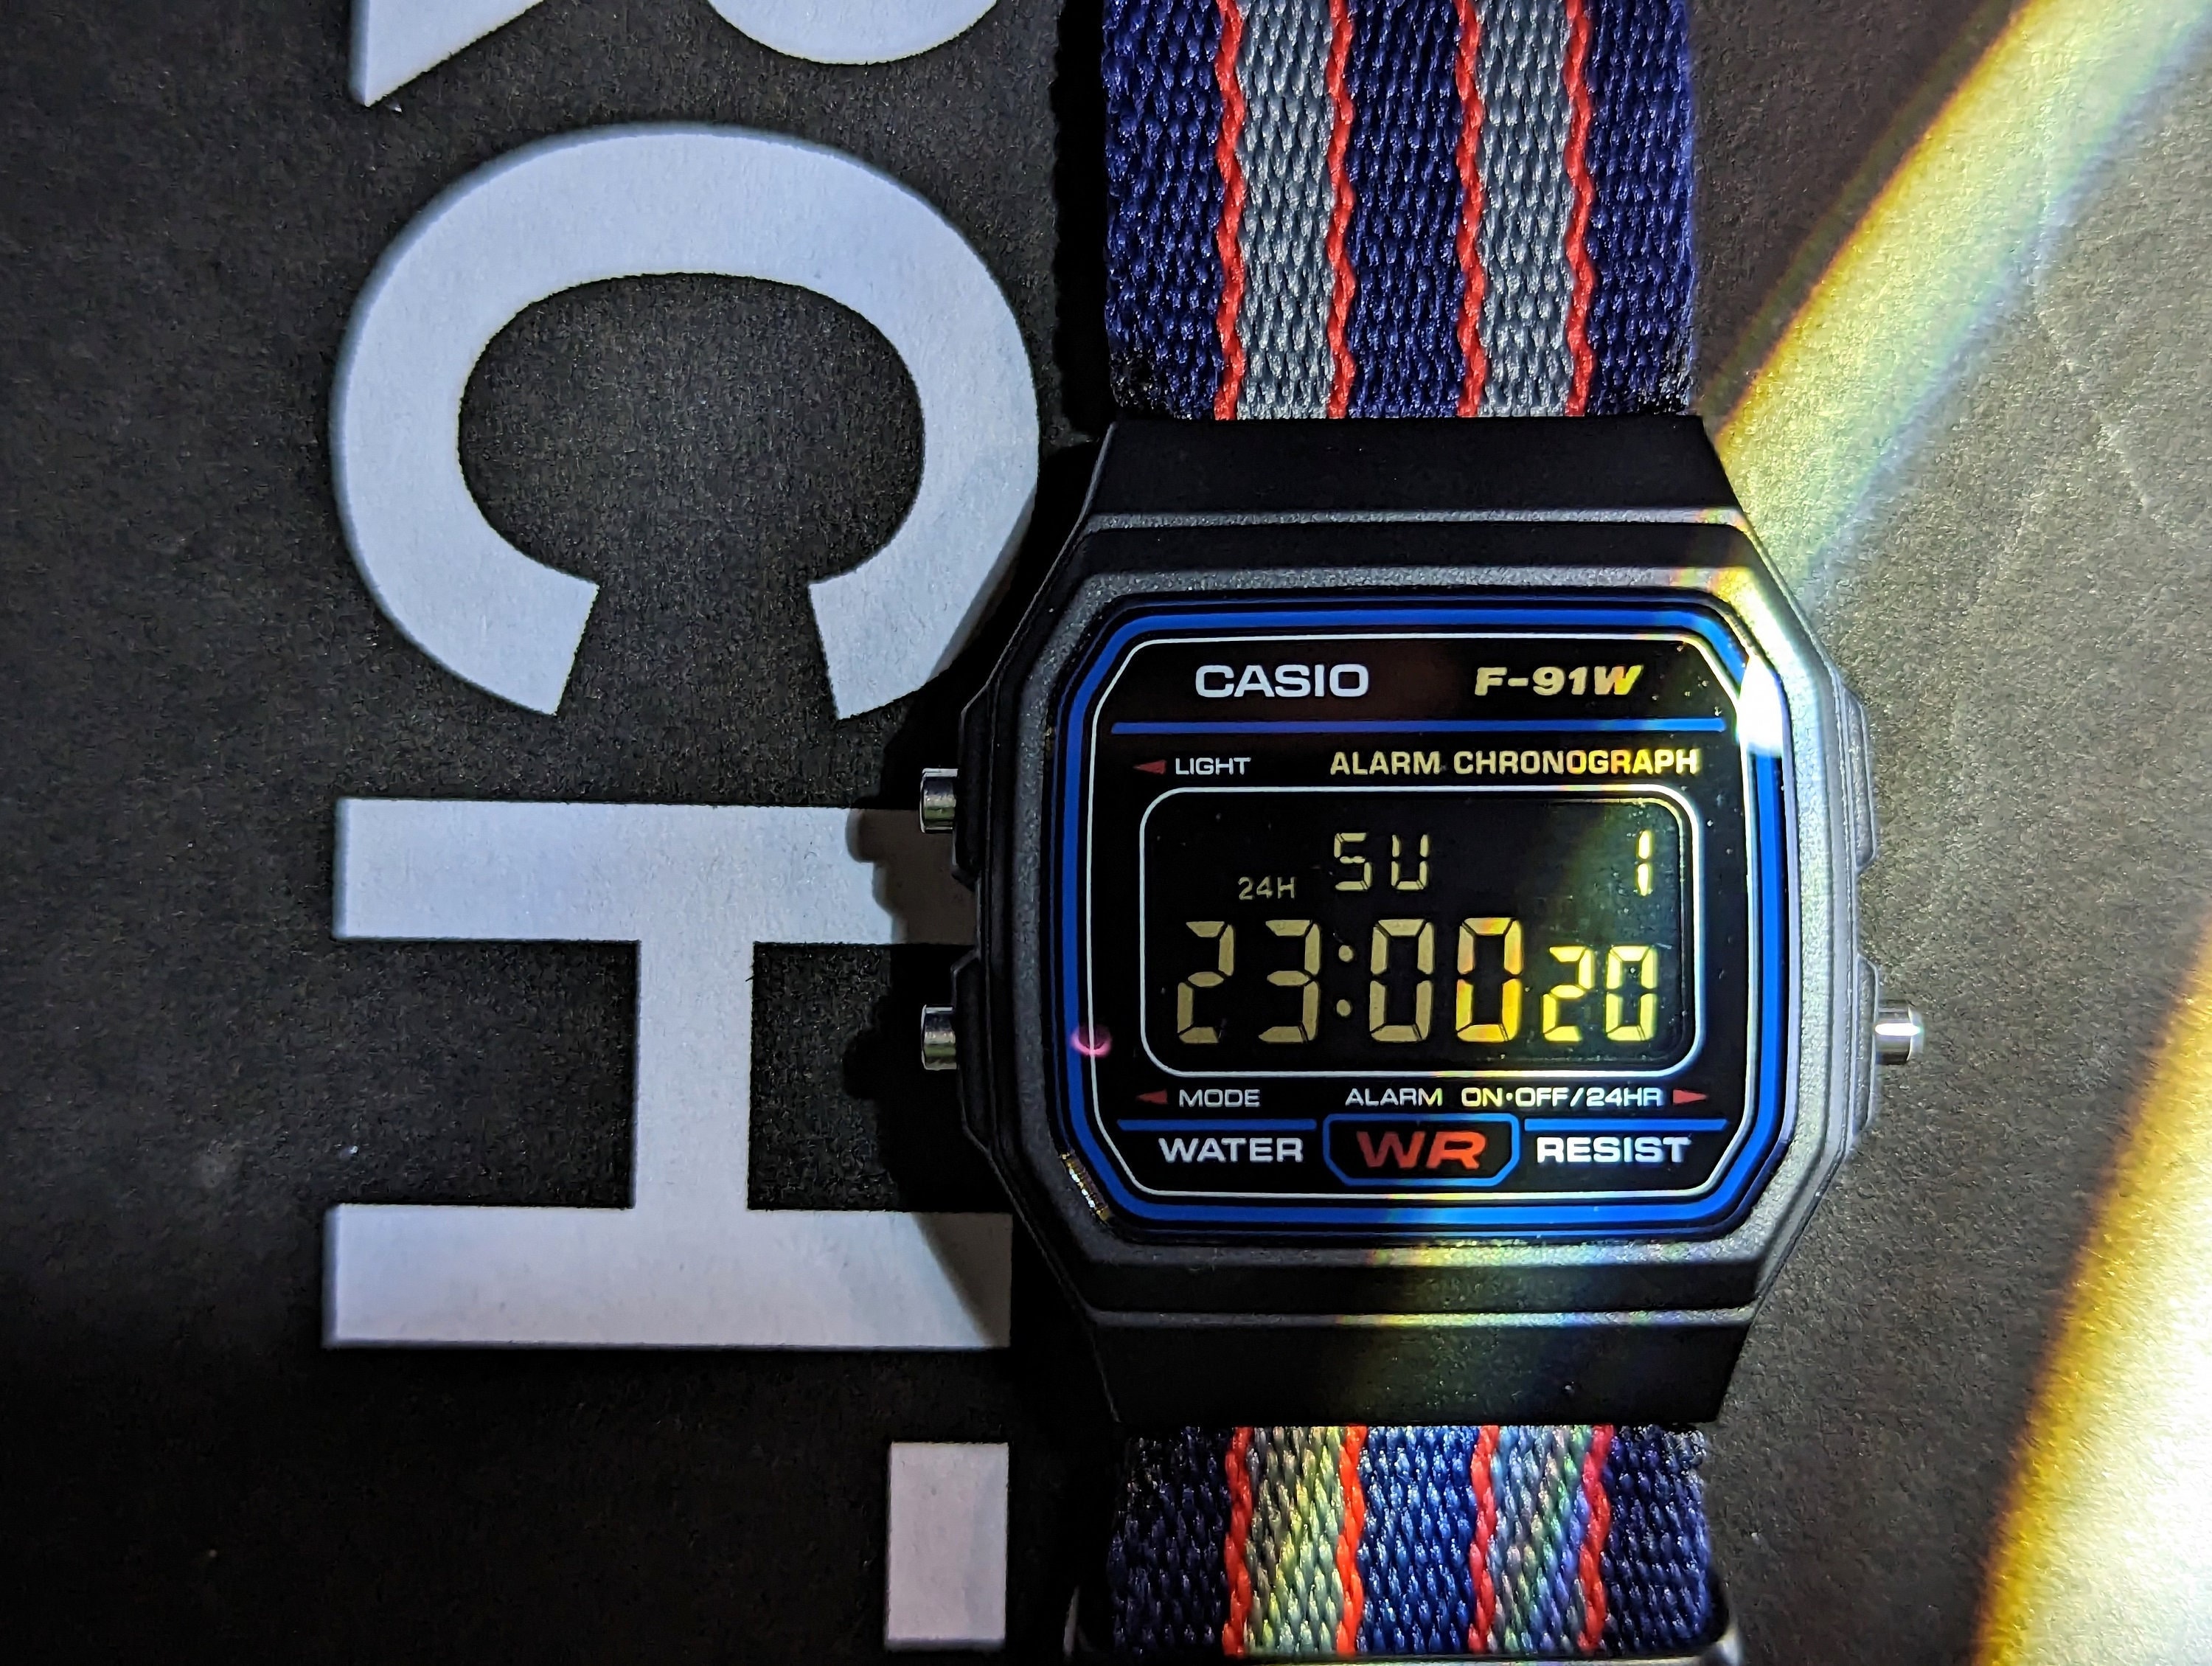 35mm Yellow Casio F91-W Classic Retro Digital LCD Watch. Mint Condition, No  Box.